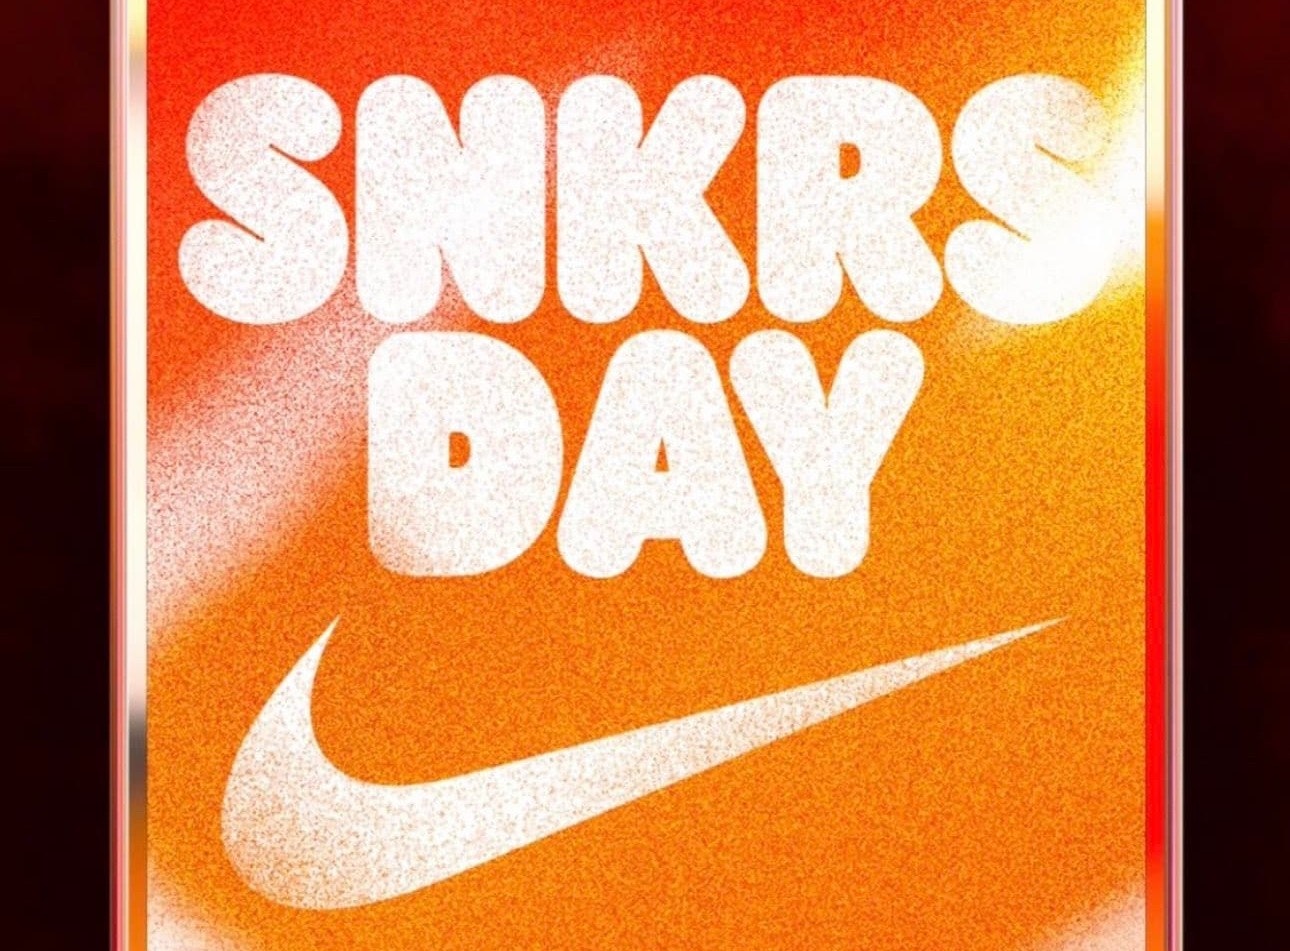 Nike SNKRS Day 2023 steht an!